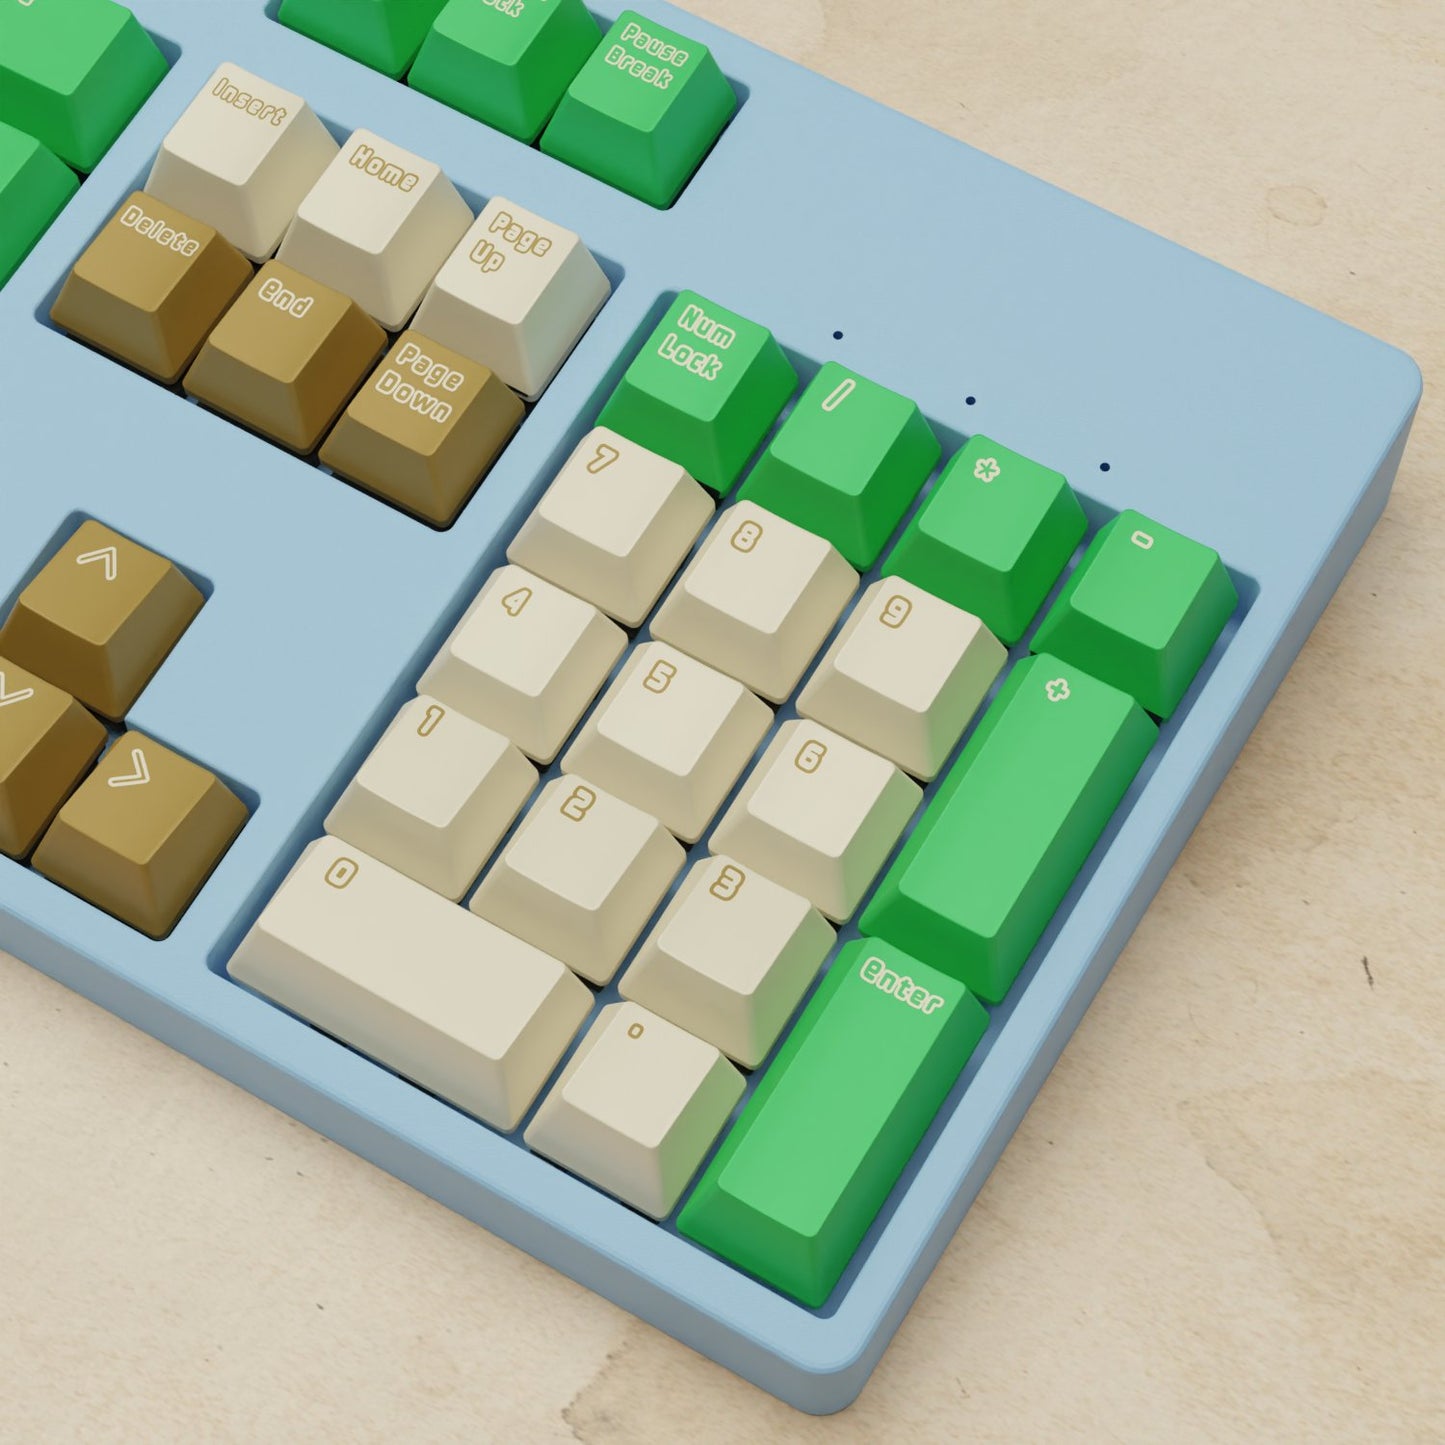 Alpha 108 - 100% Creamy Green Mechanical Keyboard - Goblintechkeys